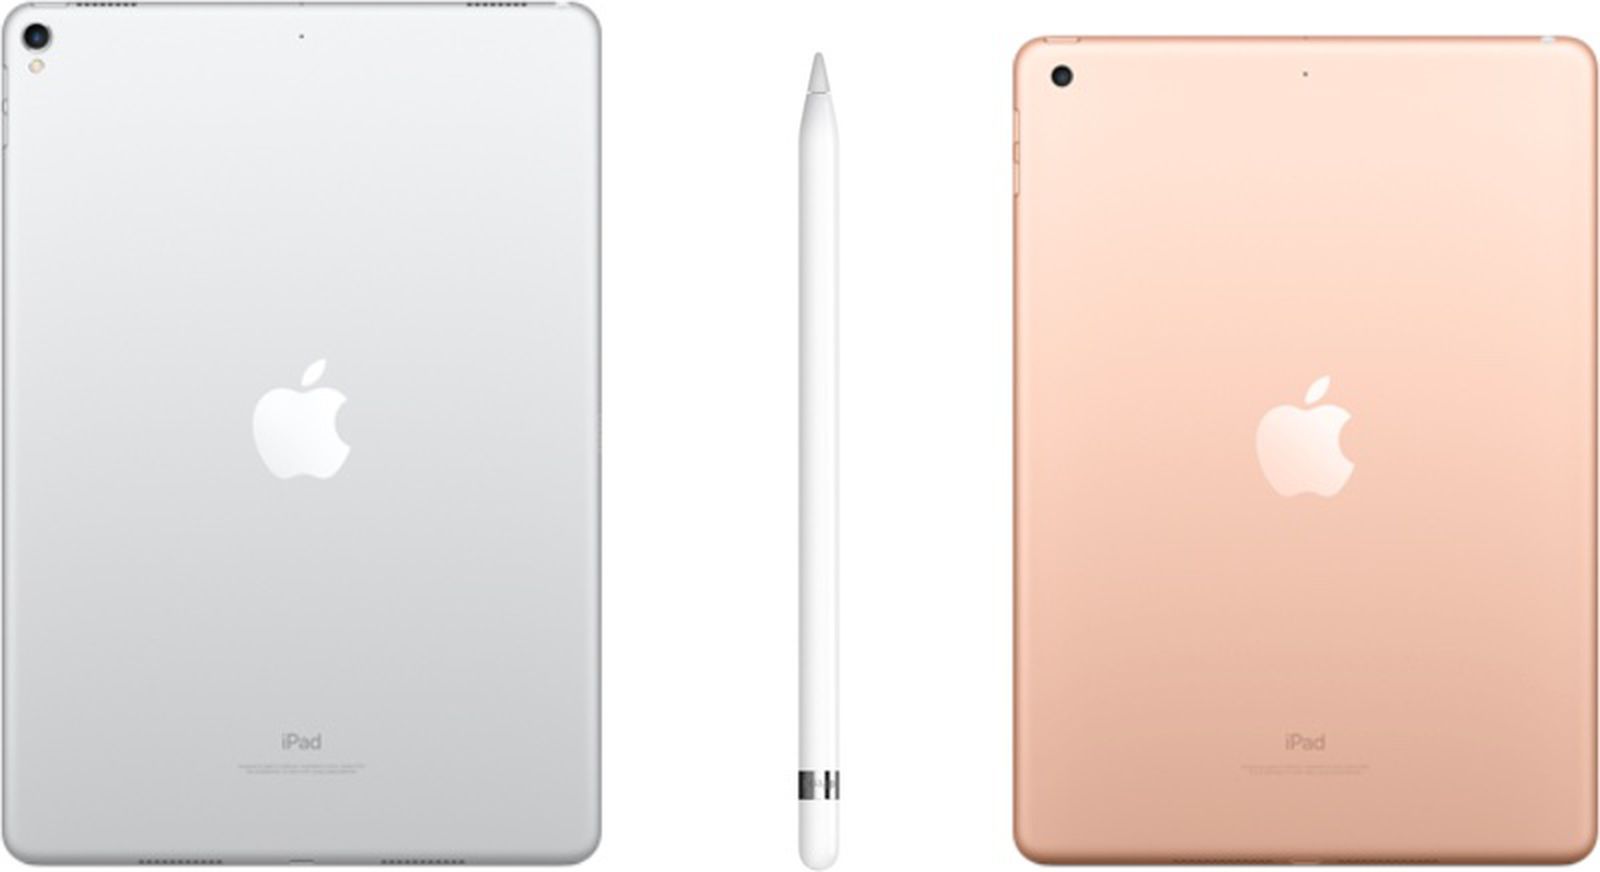 iPad 6th Generation vs. iPad 7th Generation - Comparison! 